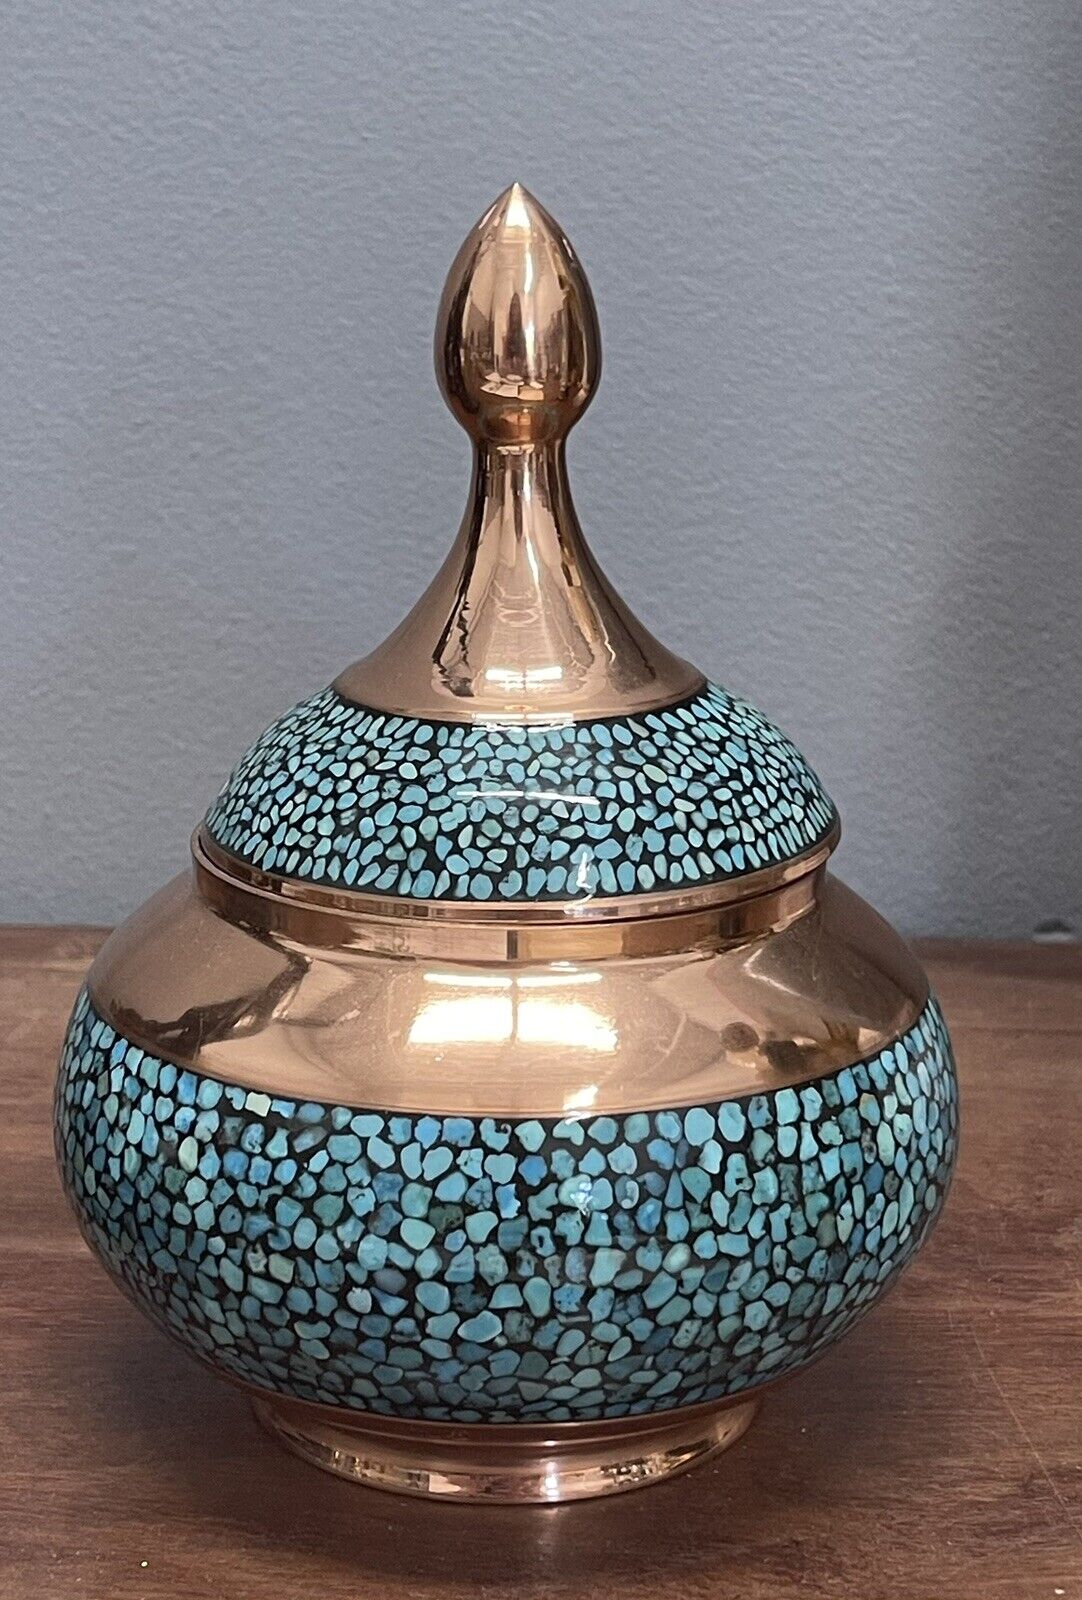 Turquoise Firoozeh Koobi Persian Copper Lidded Jug Trinket Jar Signed 7”